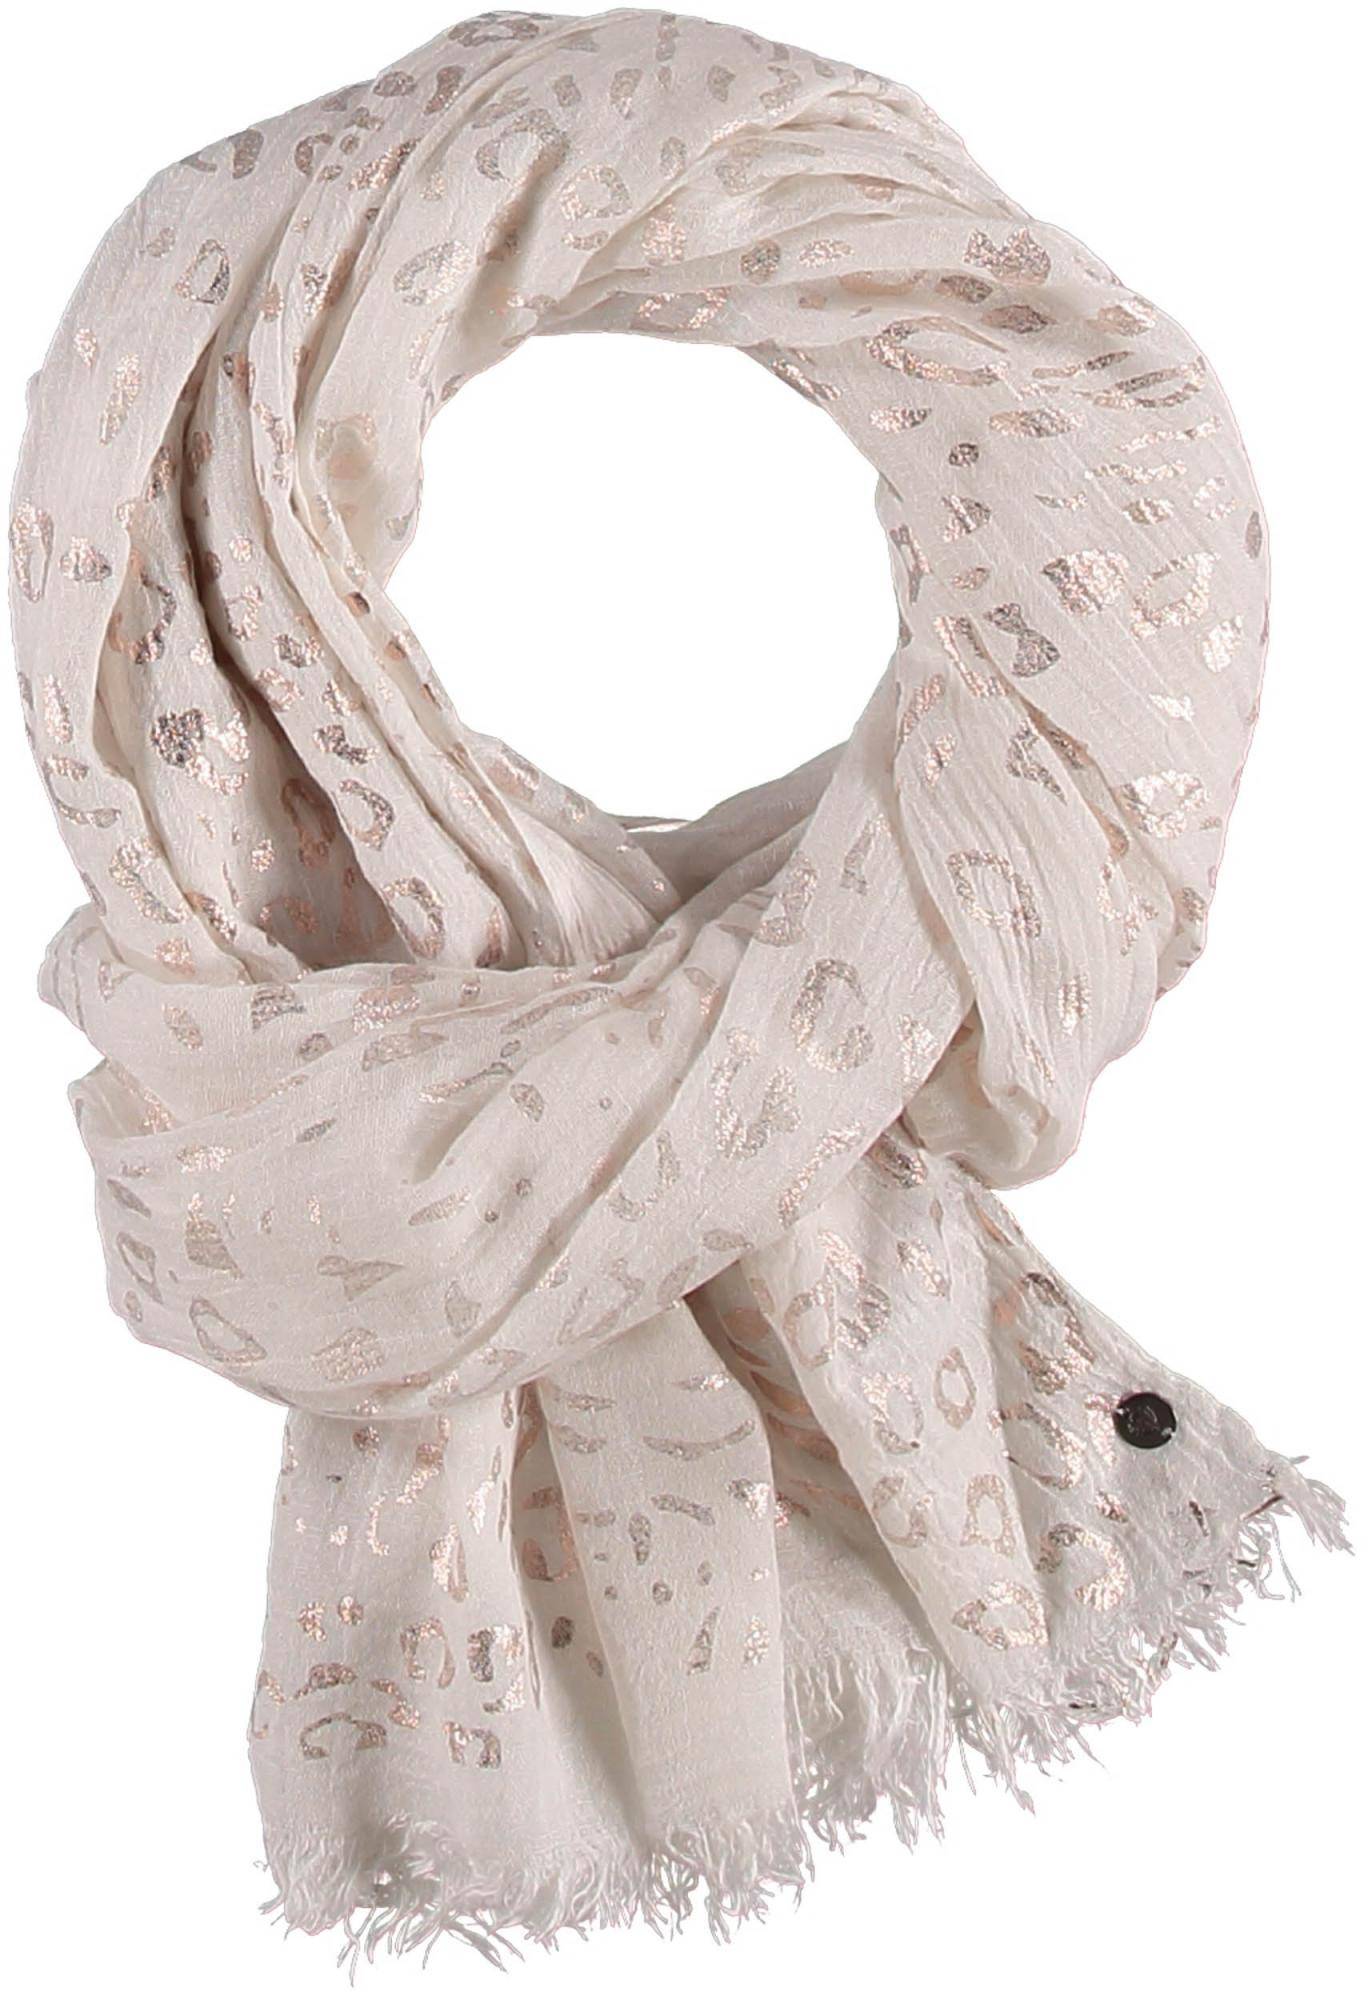 Женский шарф FRAAS, белый